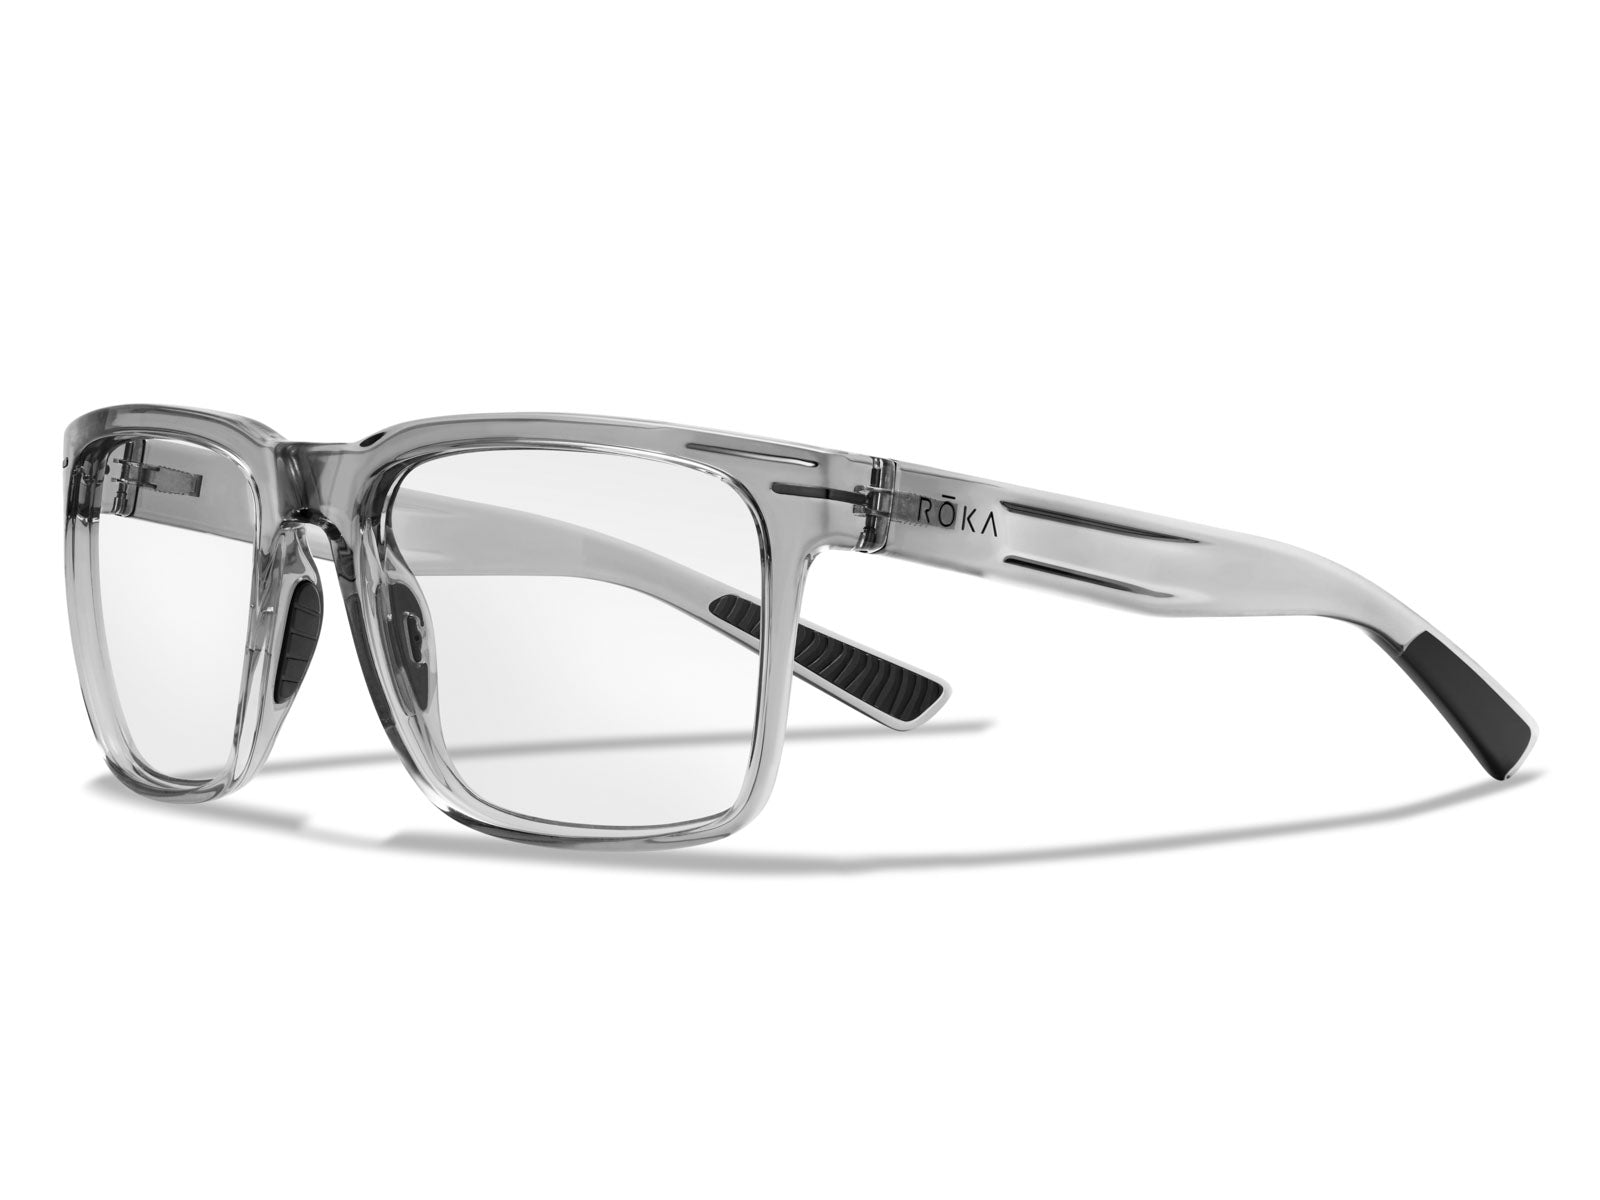 Roka Barton, Ultra Lightweight Sunglasses, Rectangular Shape